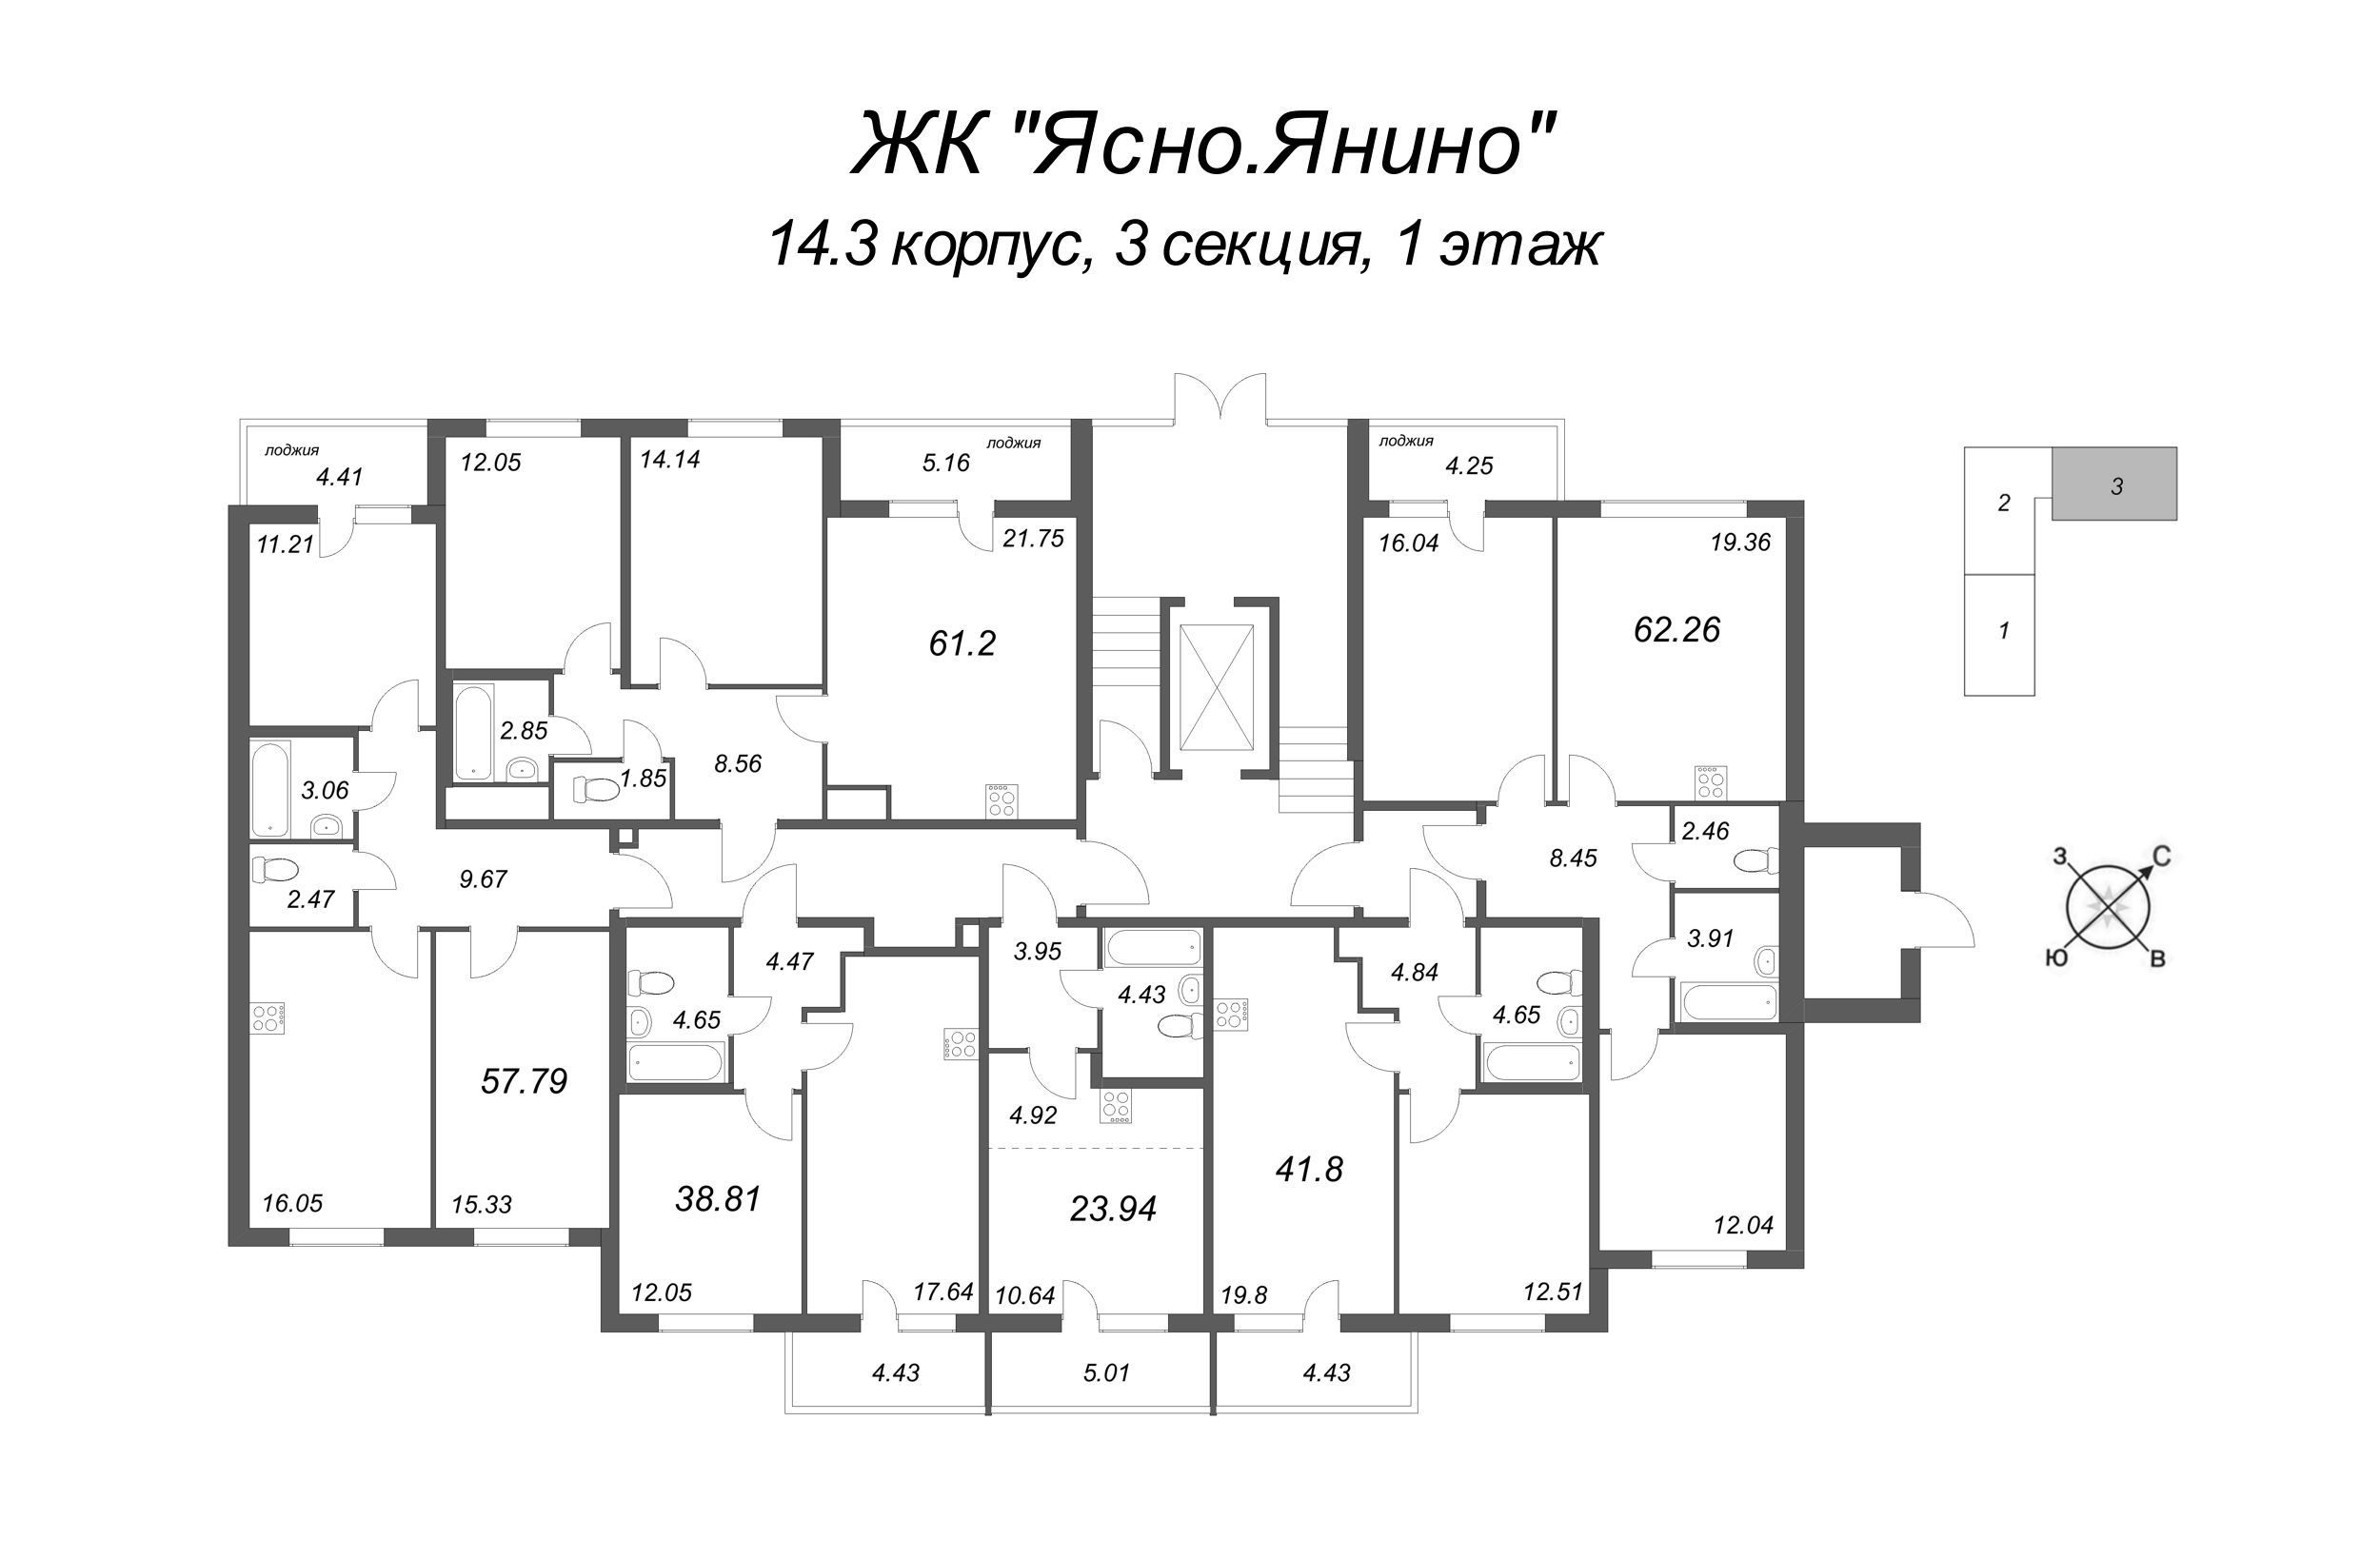 2-комнатная (Евро) квартира, 38.81 м² - планировка этажа